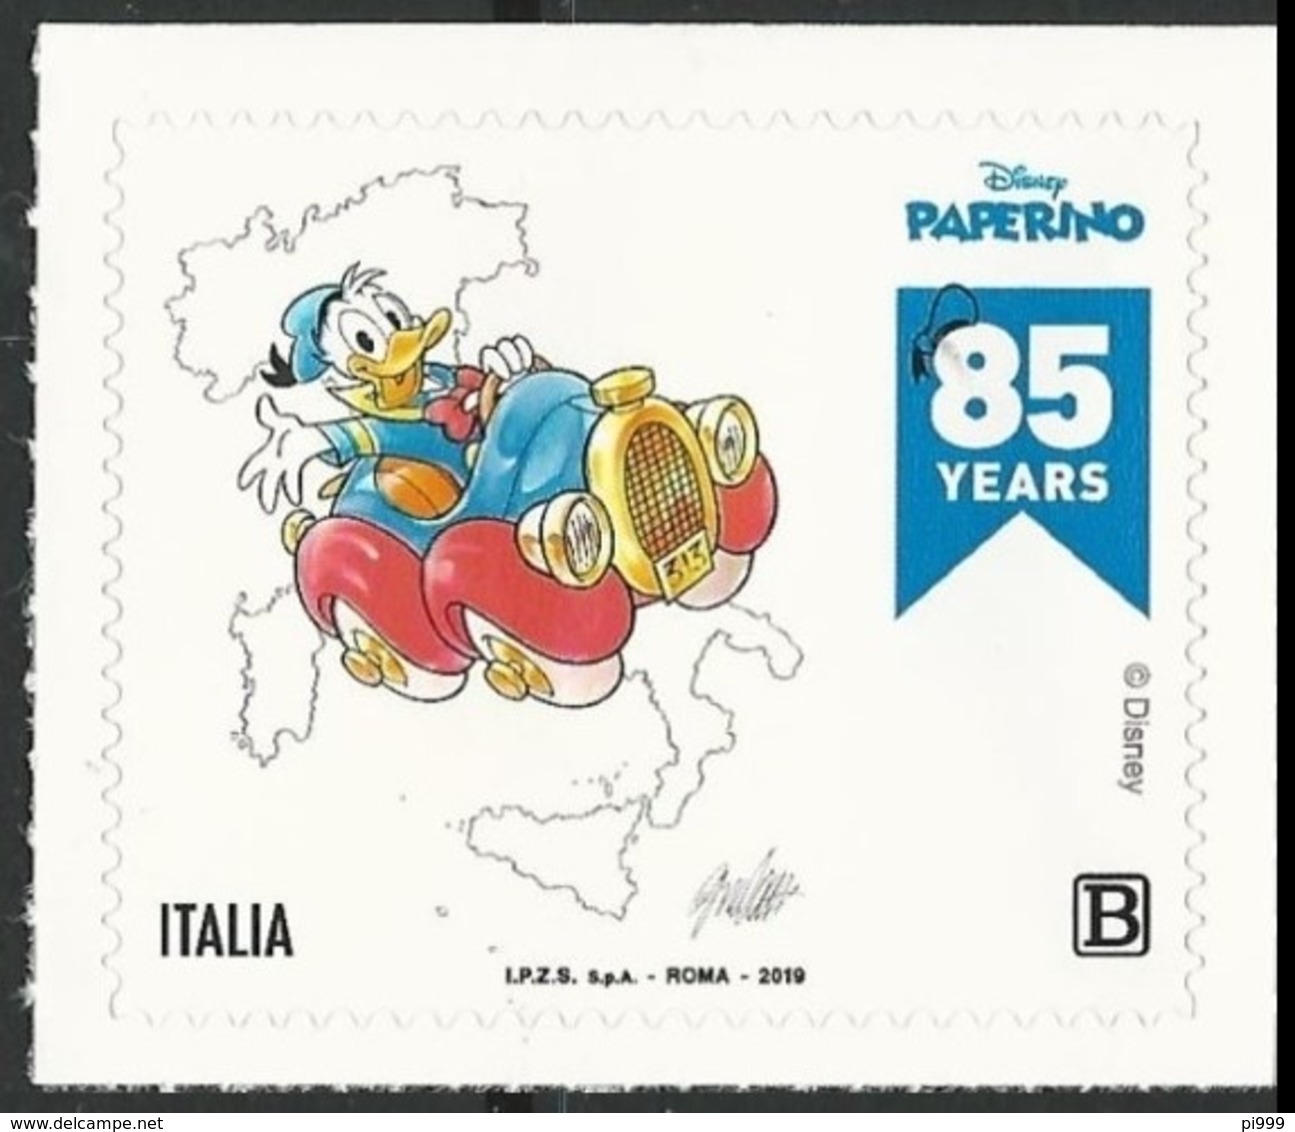 Italia Italy 2019 - 85° Anniversario Di Paperino / Donald Duck - Single Stamp From Sheet (MNH) - Disney